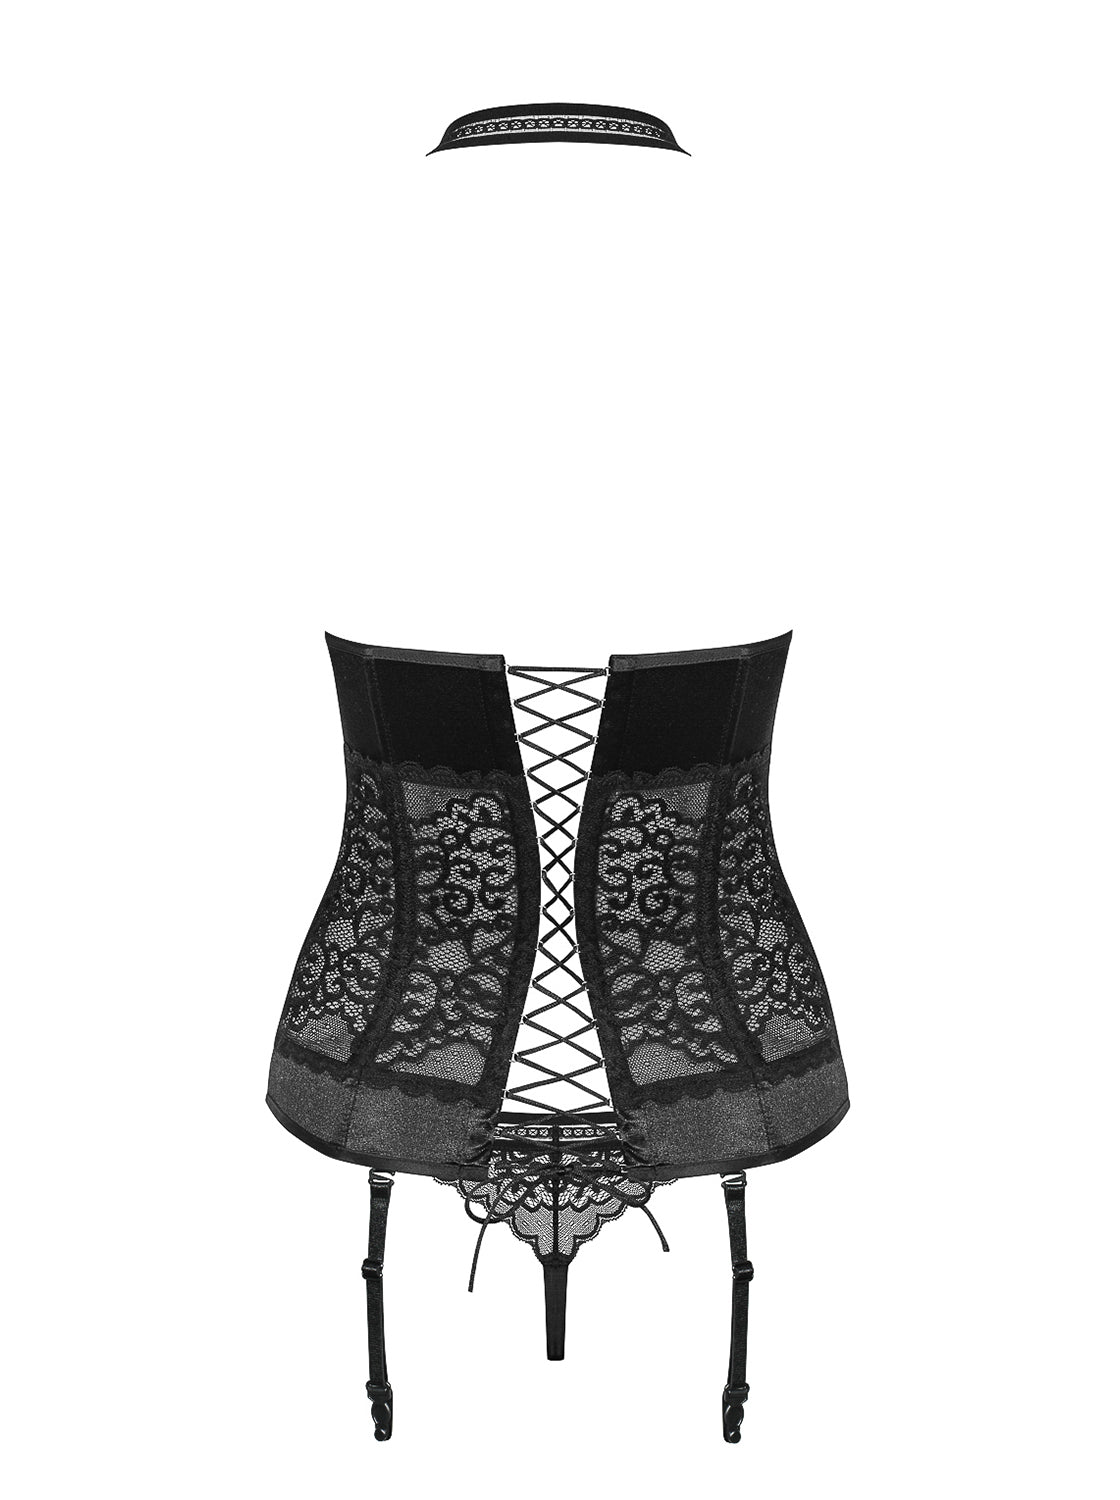 Unique corset in a hot combination of sensual lace